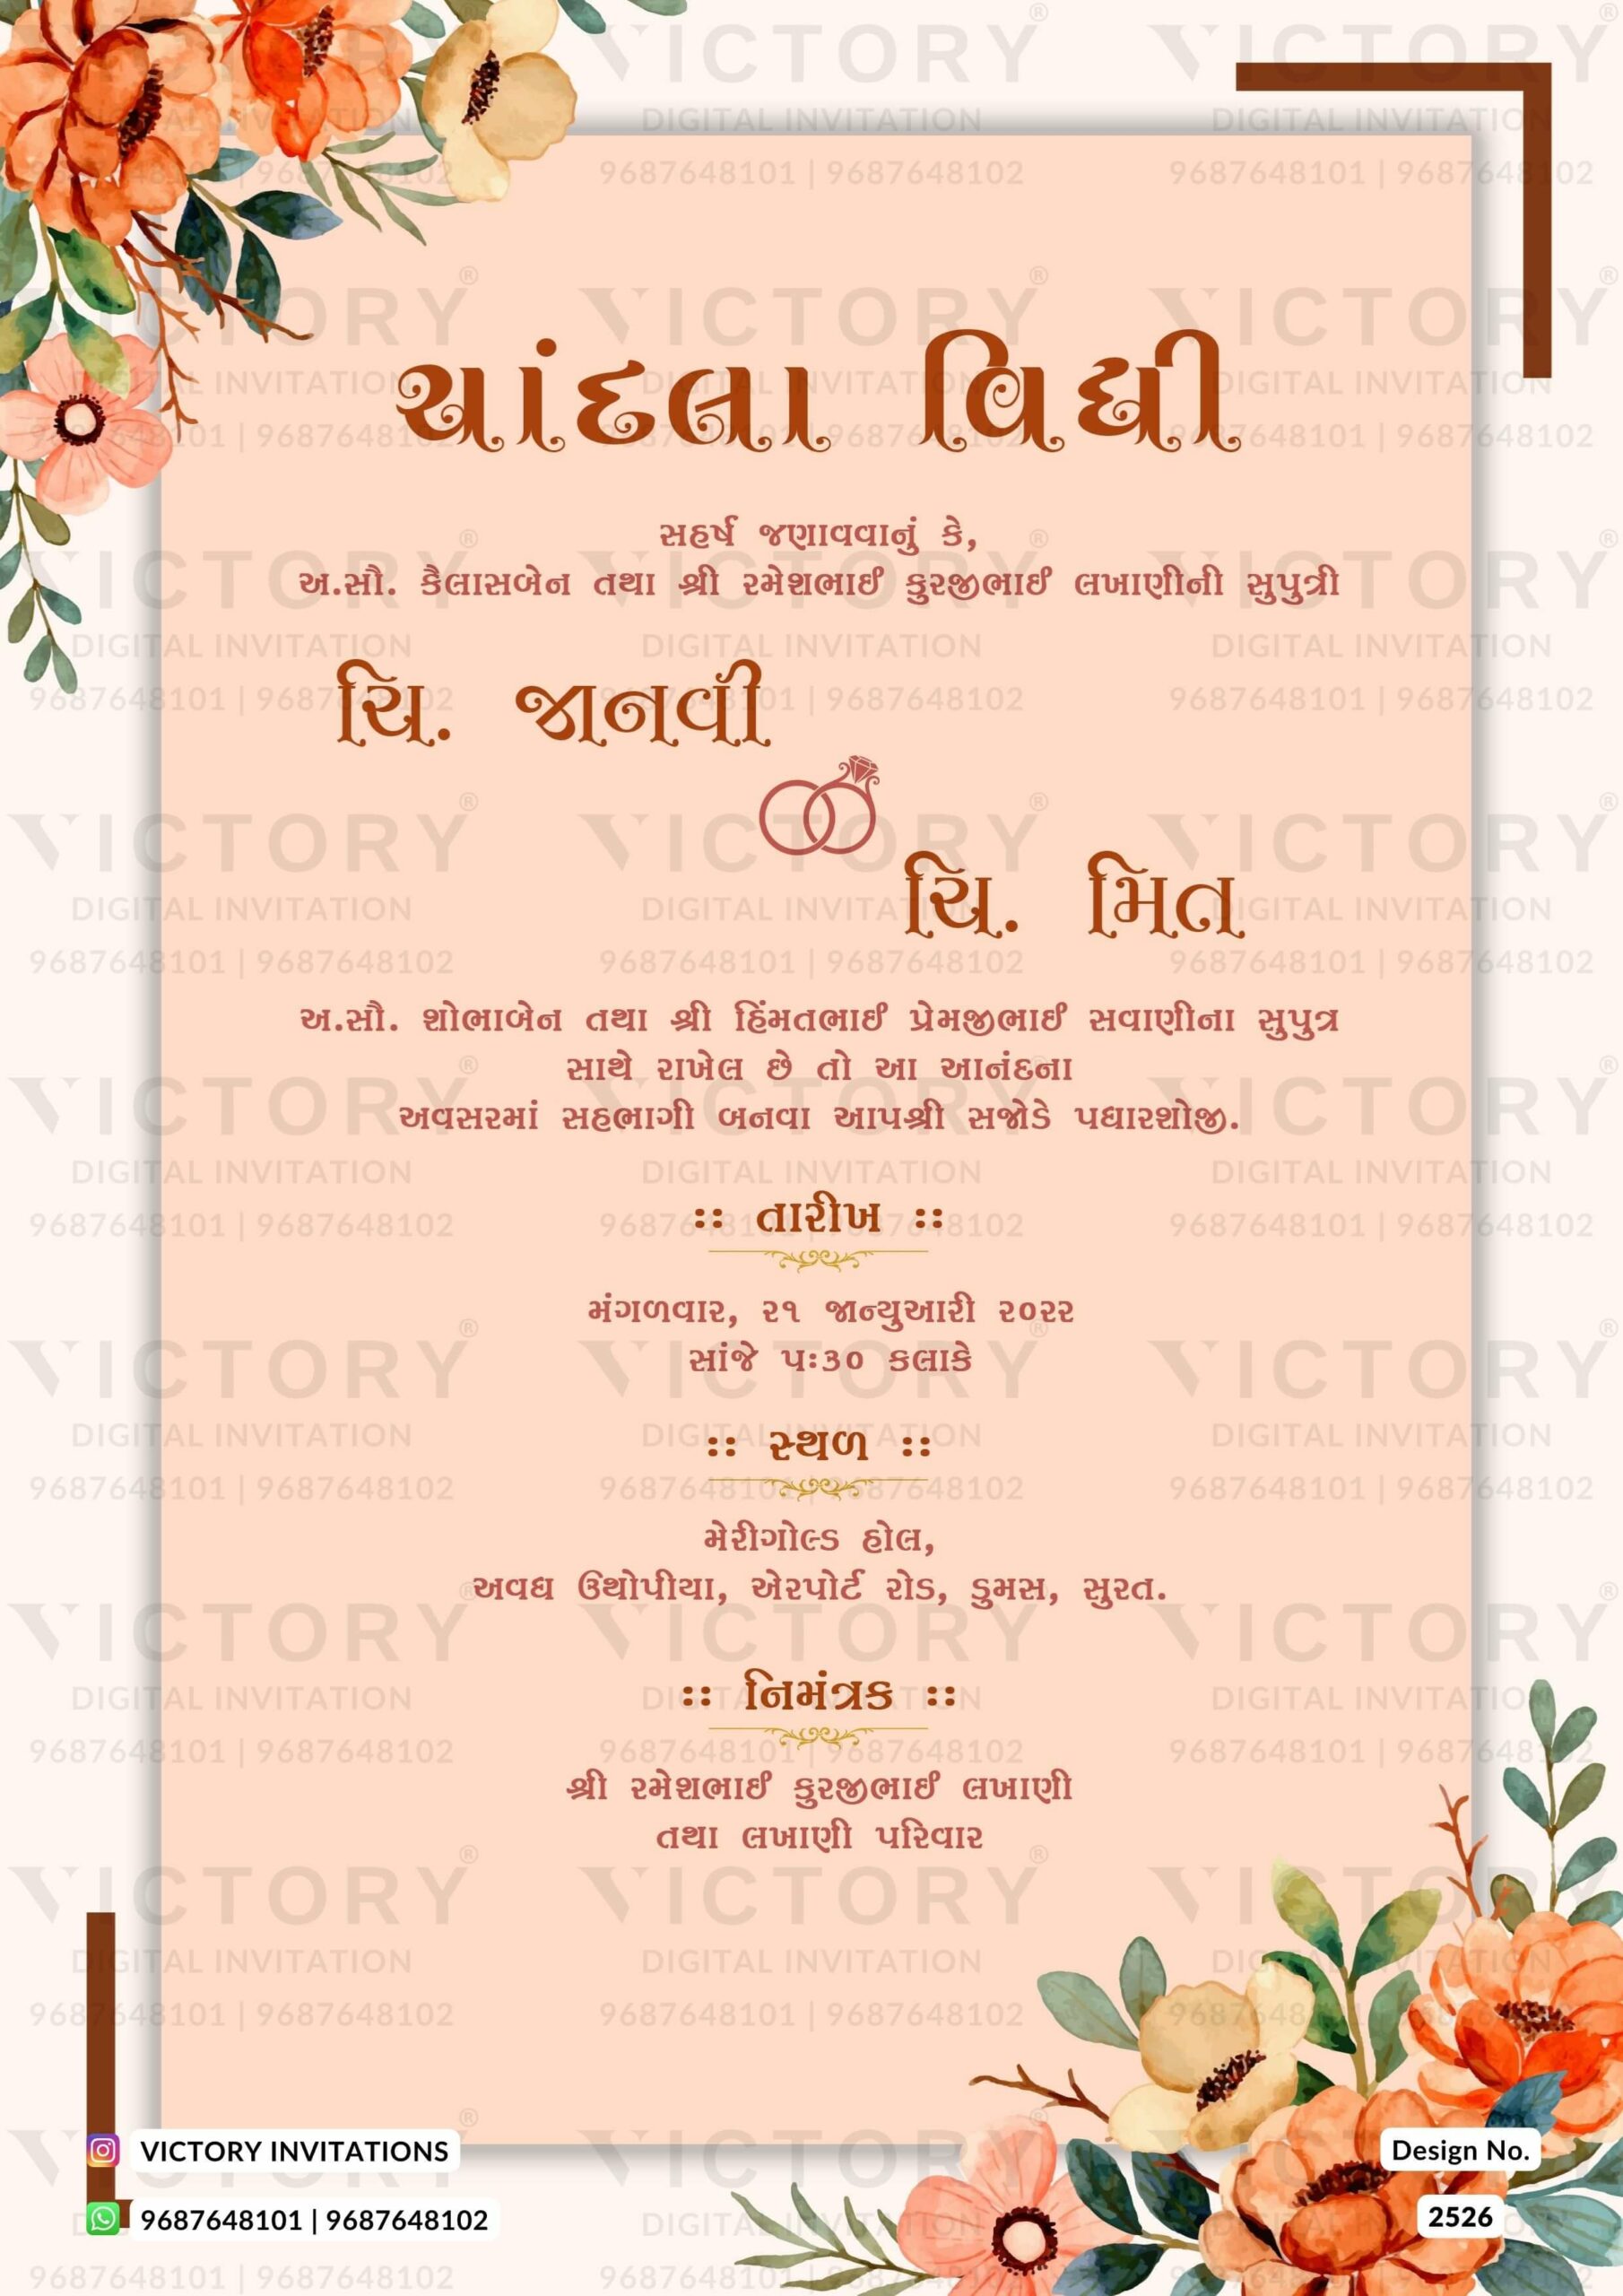 orange color floral theme digital engagement invitation card in Gujarati language design 2526